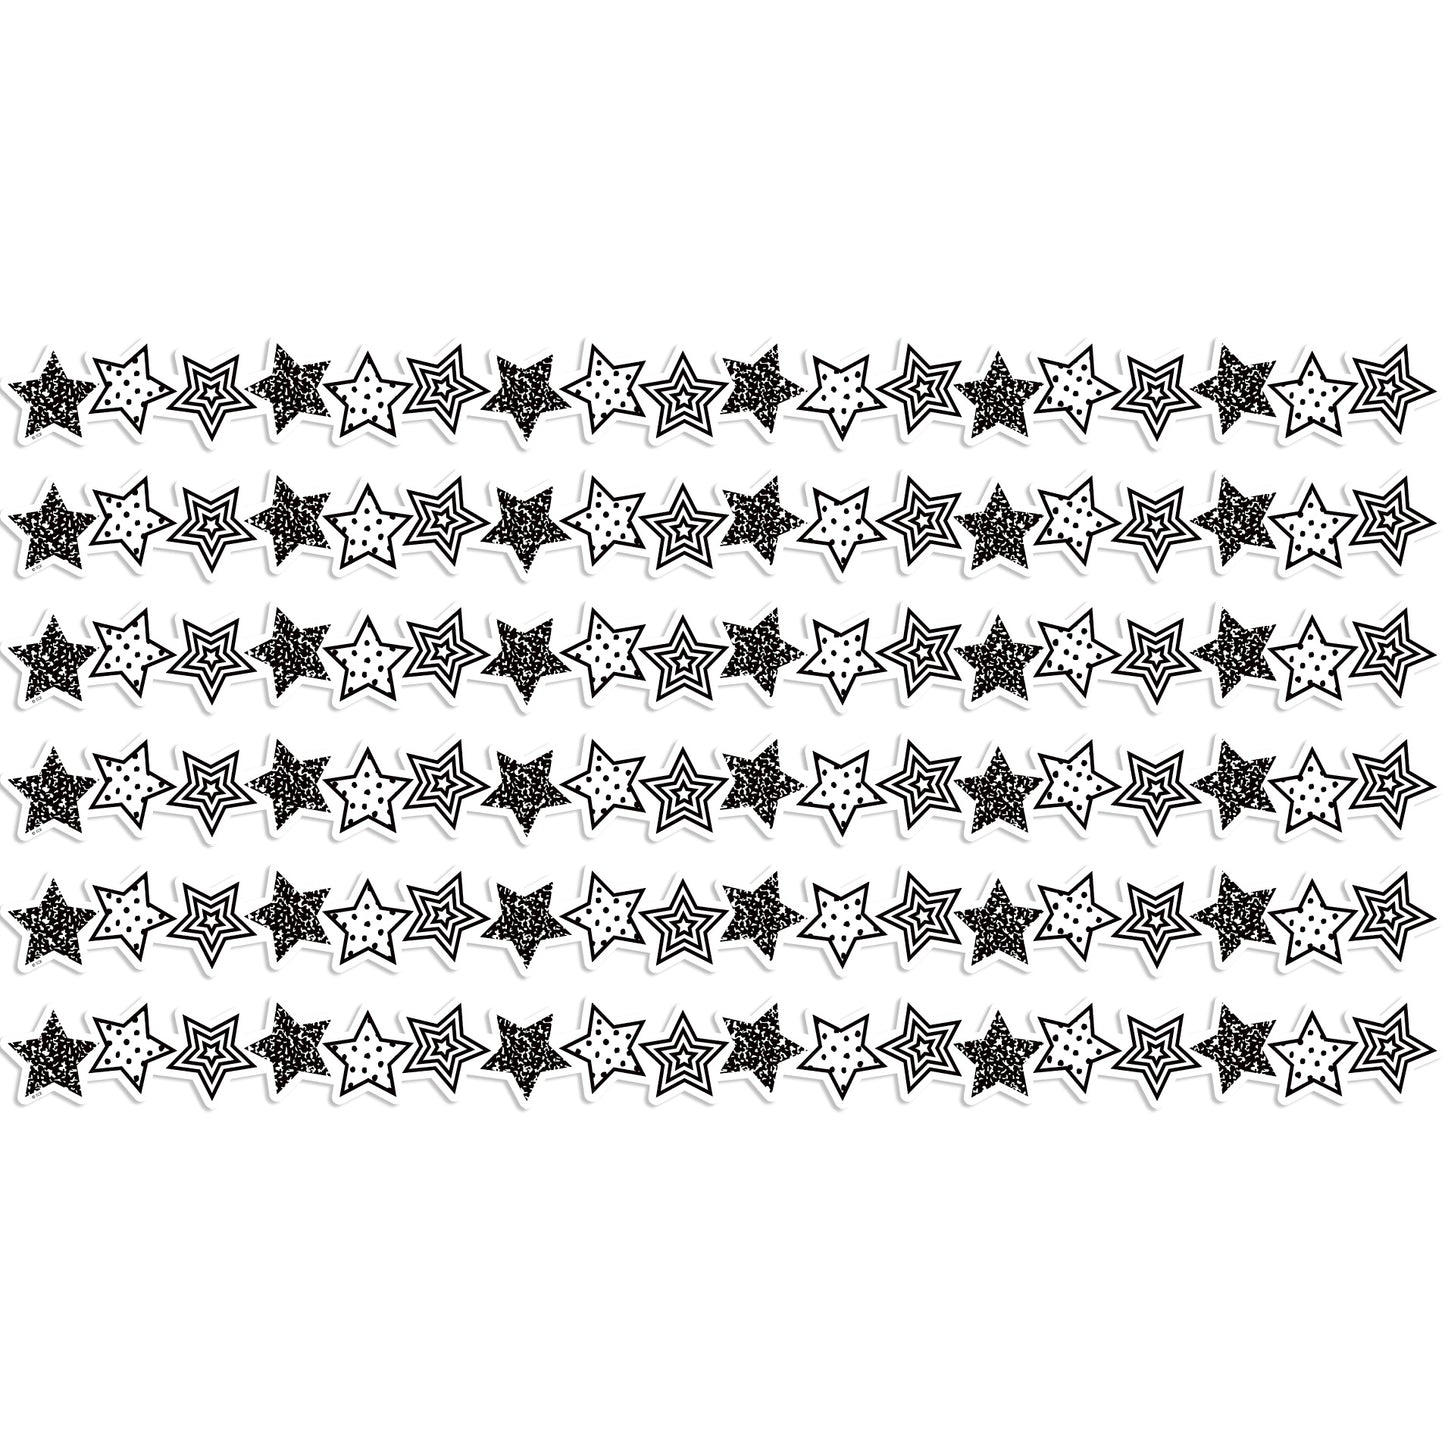 Black and White Stars Die-Cut Border Trim, 35 Feet Per Pack, 6 Packs